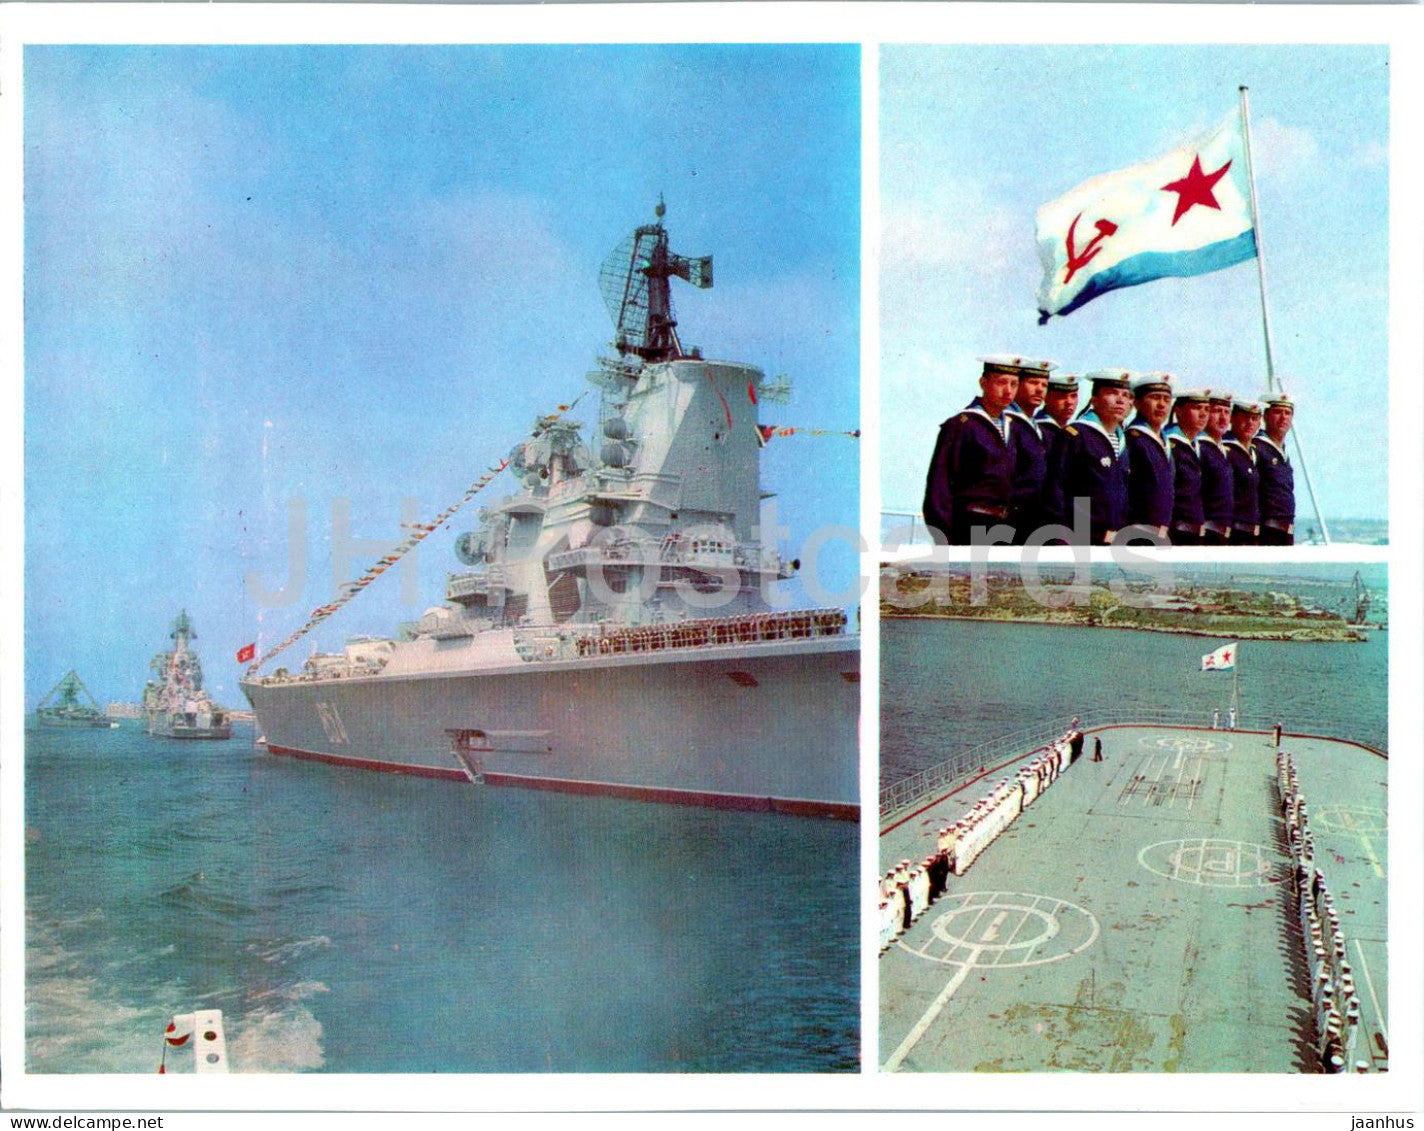 Sevastopol - combat shi in holiday decoration - Black Sea Fleet - war ship - Crimea - 1977 - Ukraine USSR - unused - JH Postcards